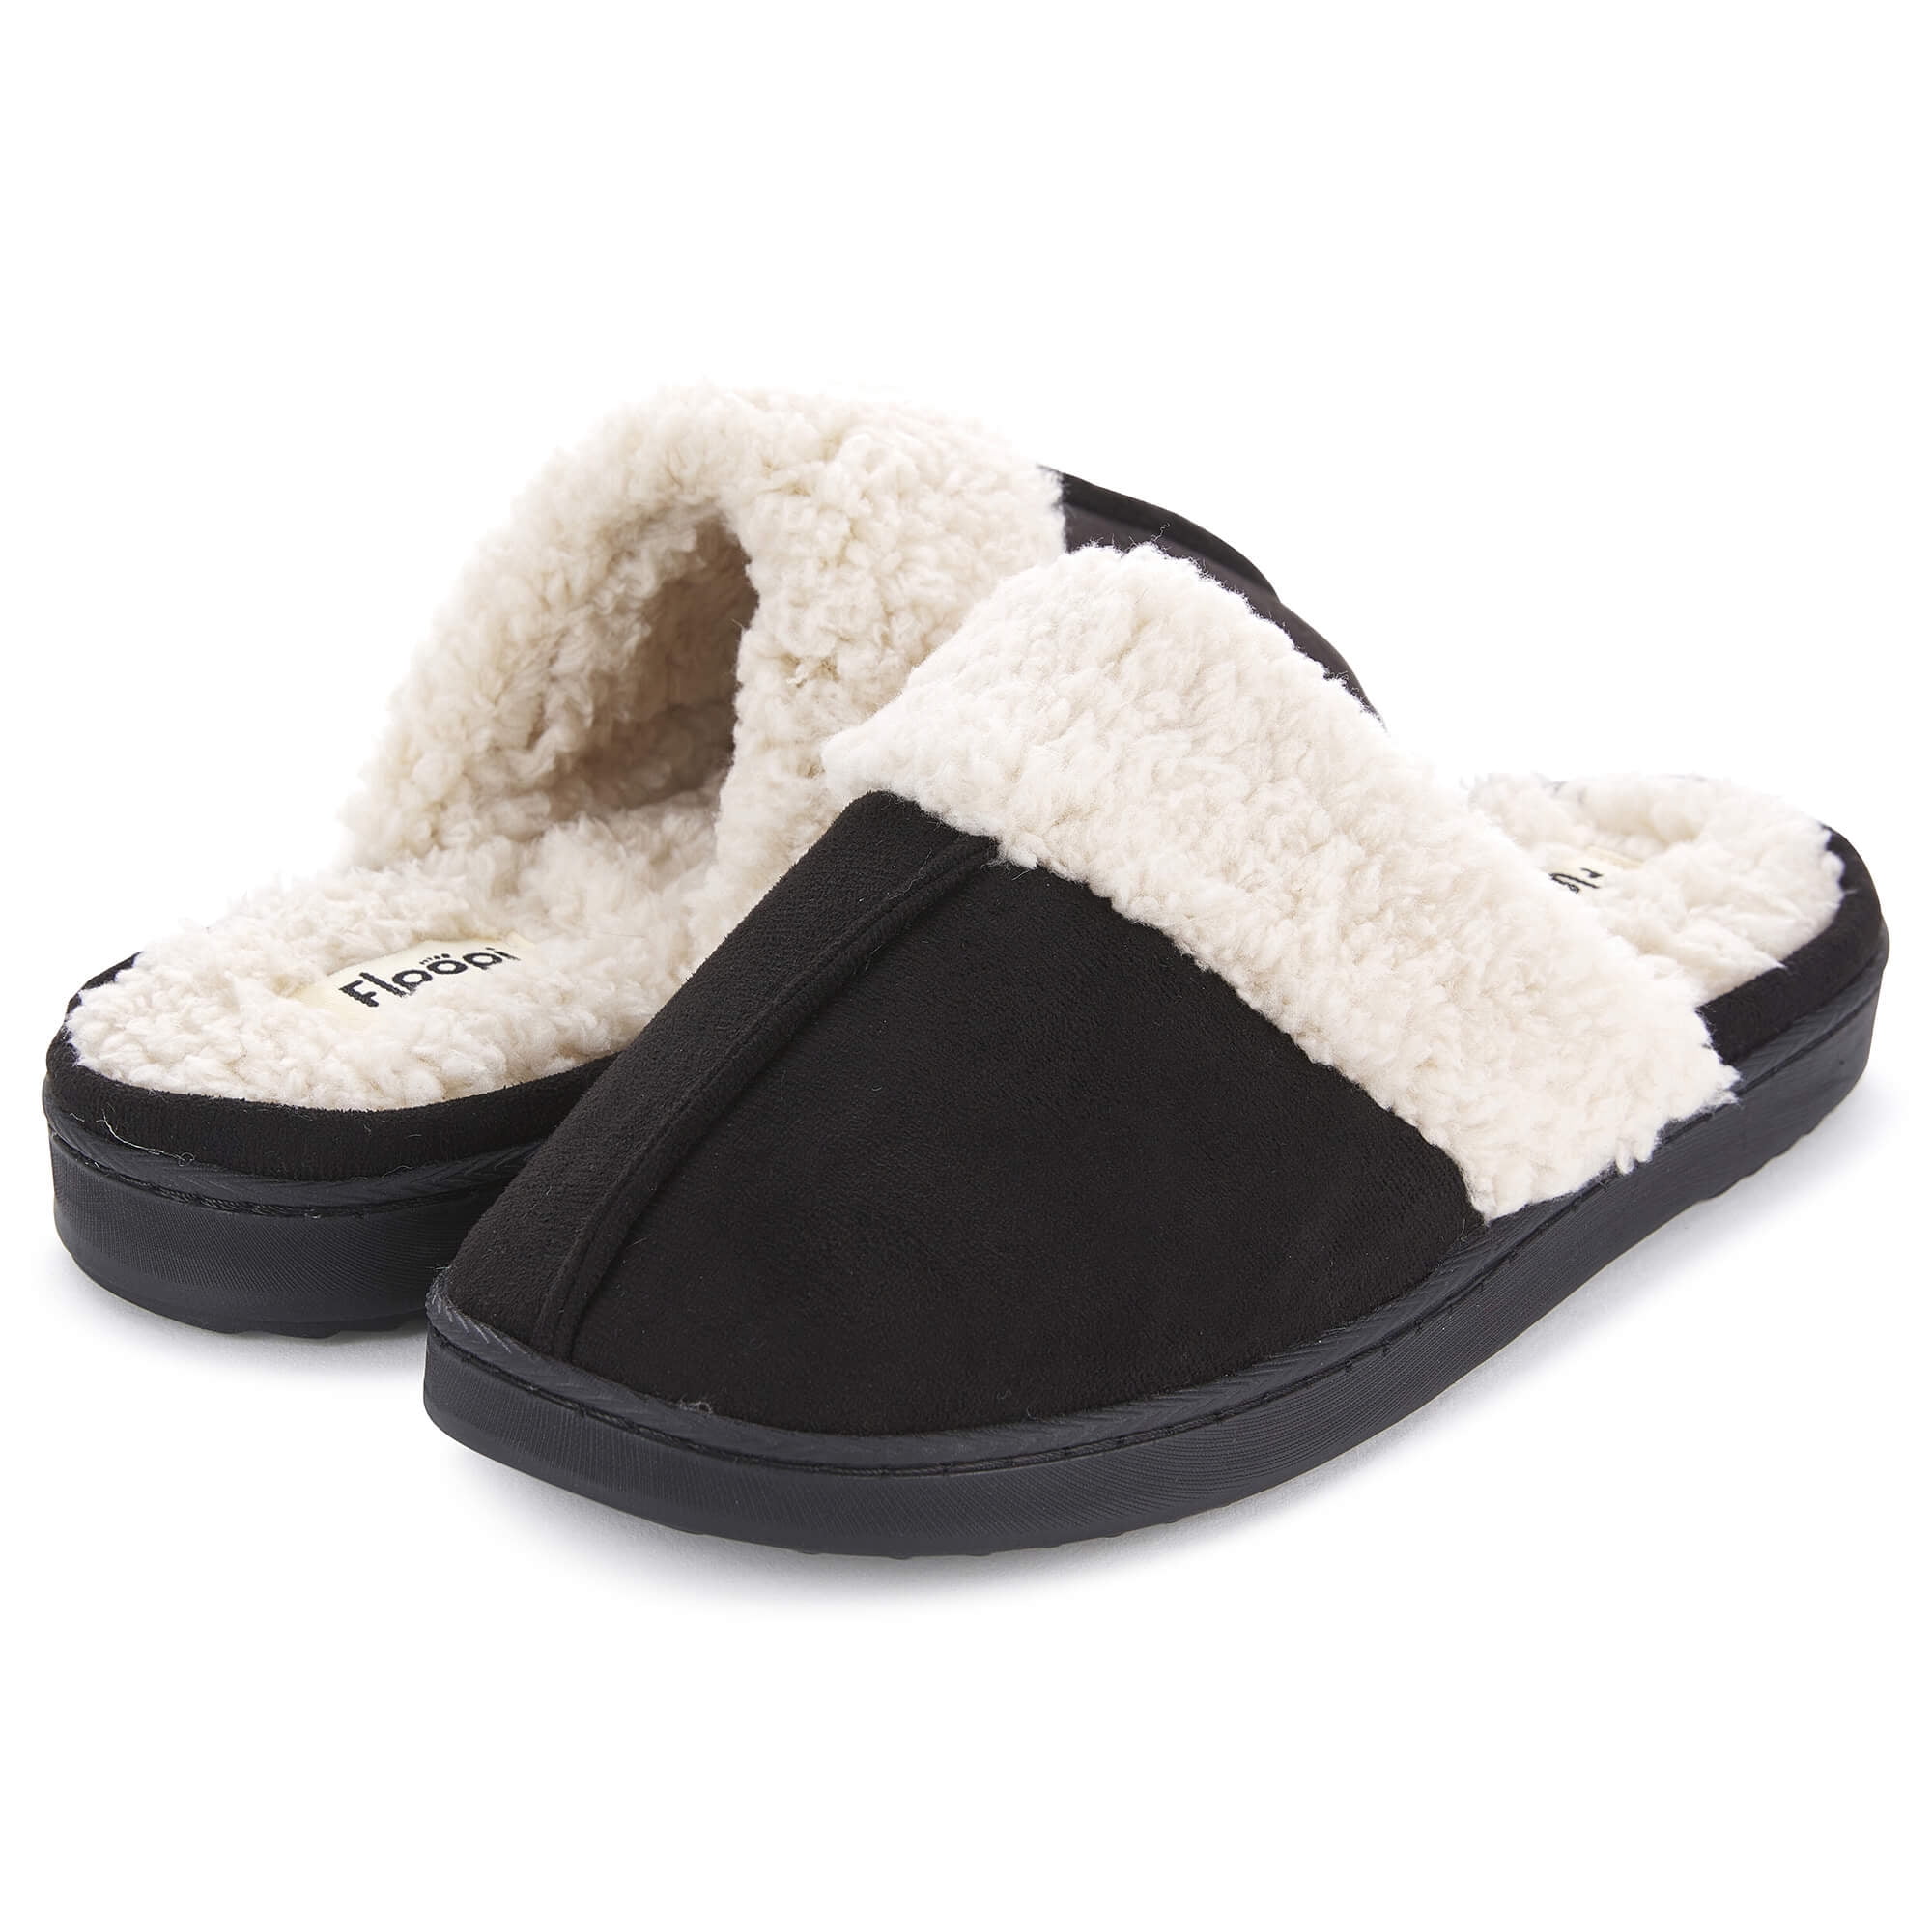 Ladies faux suede fur lined comfort memory foam slip on mule slipper Size M 5-6 